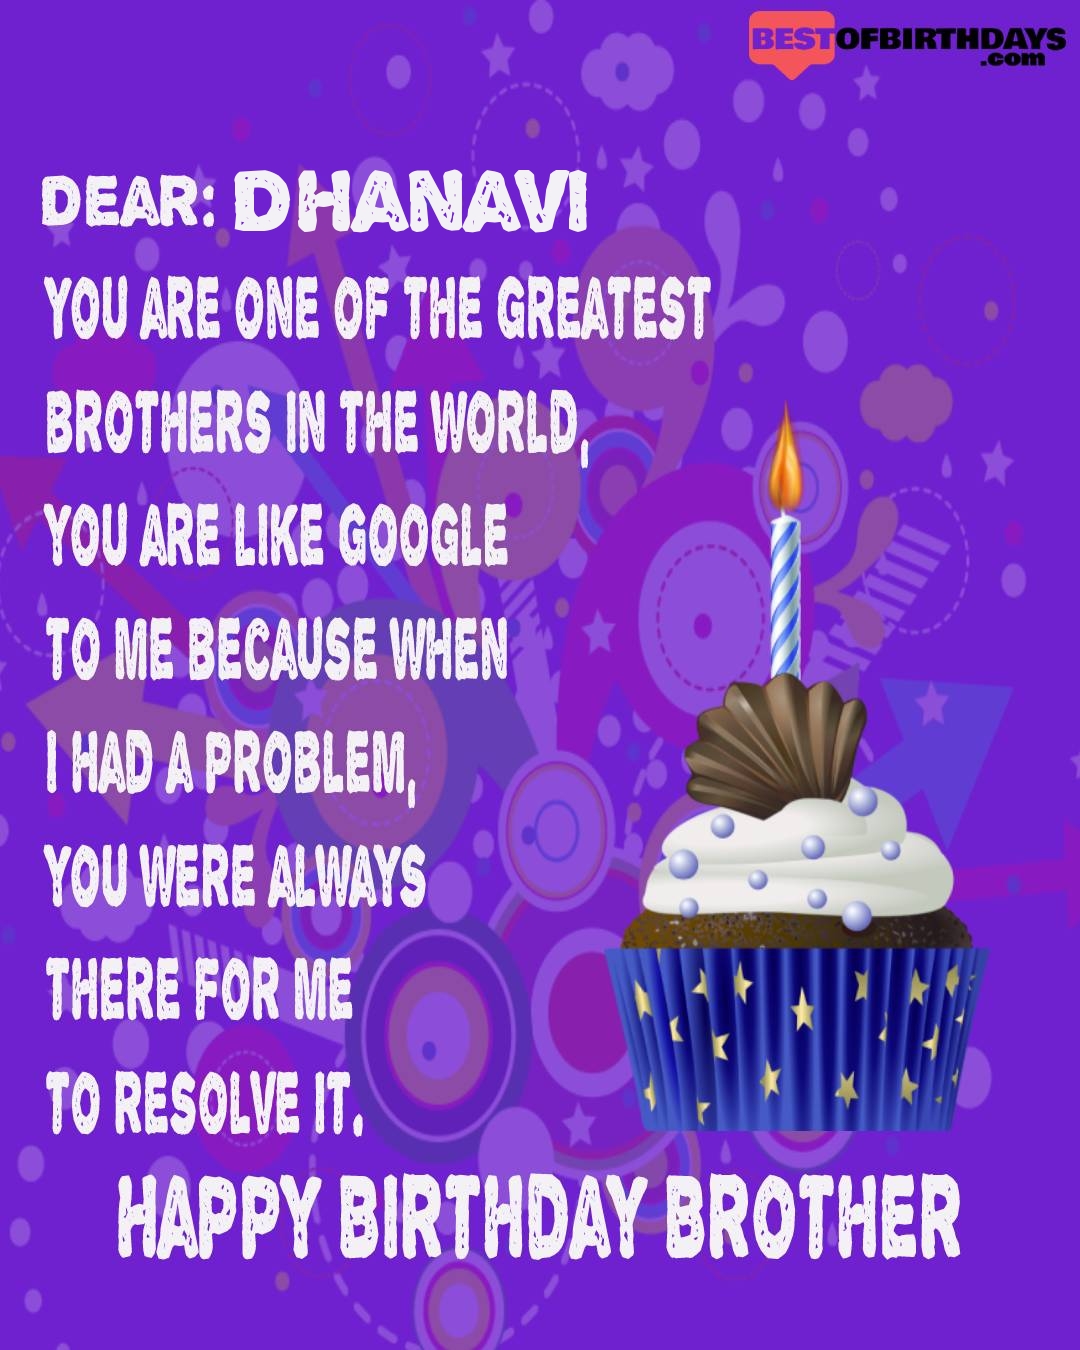 Happy birthday dhanavi bhai brother bro